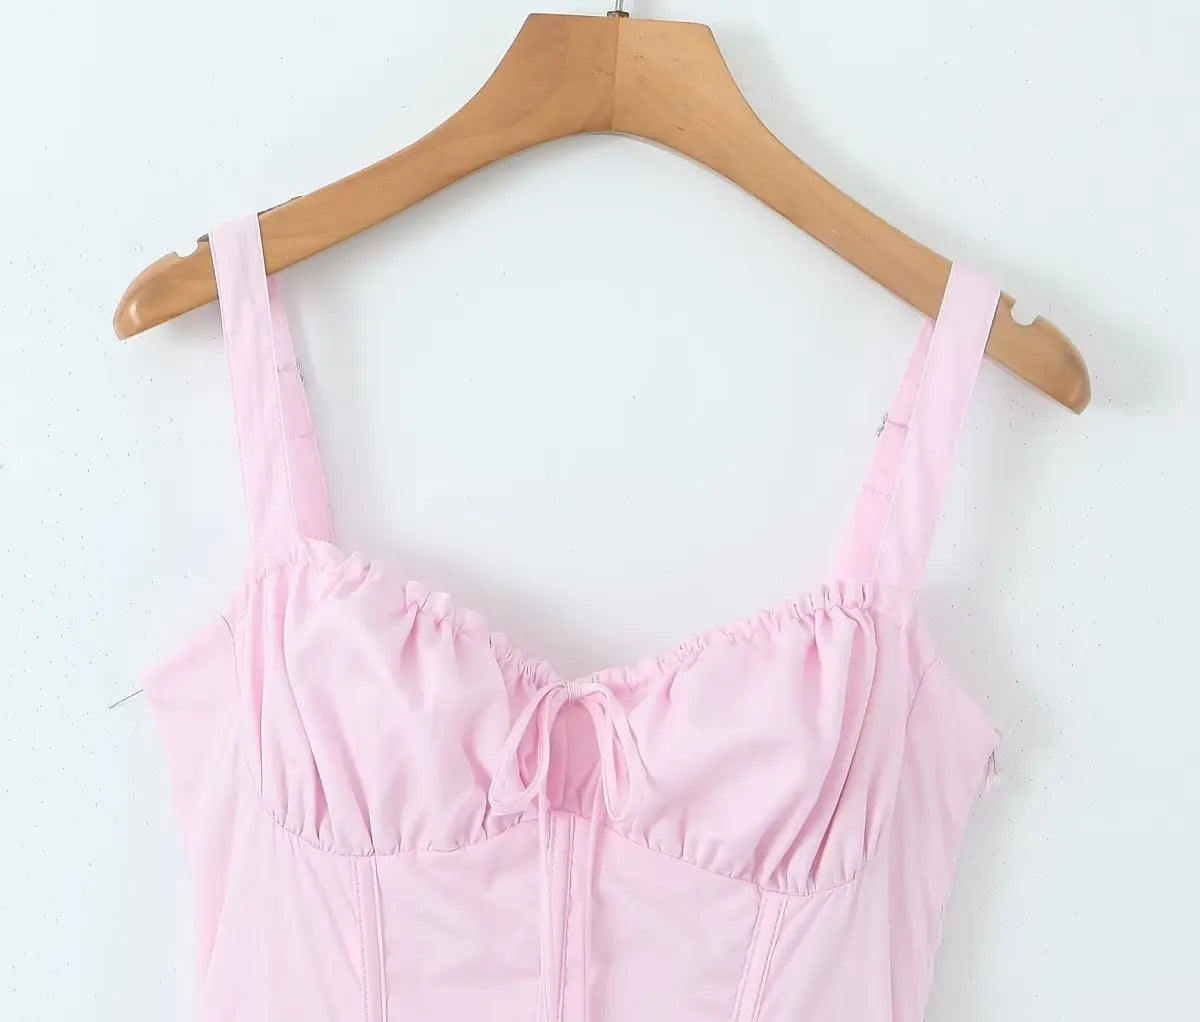 Voguable New Fashion Women Back Lacing Up Bandage Pink Slim Sling Mini Dress Party Summer Cotton Robe voguable